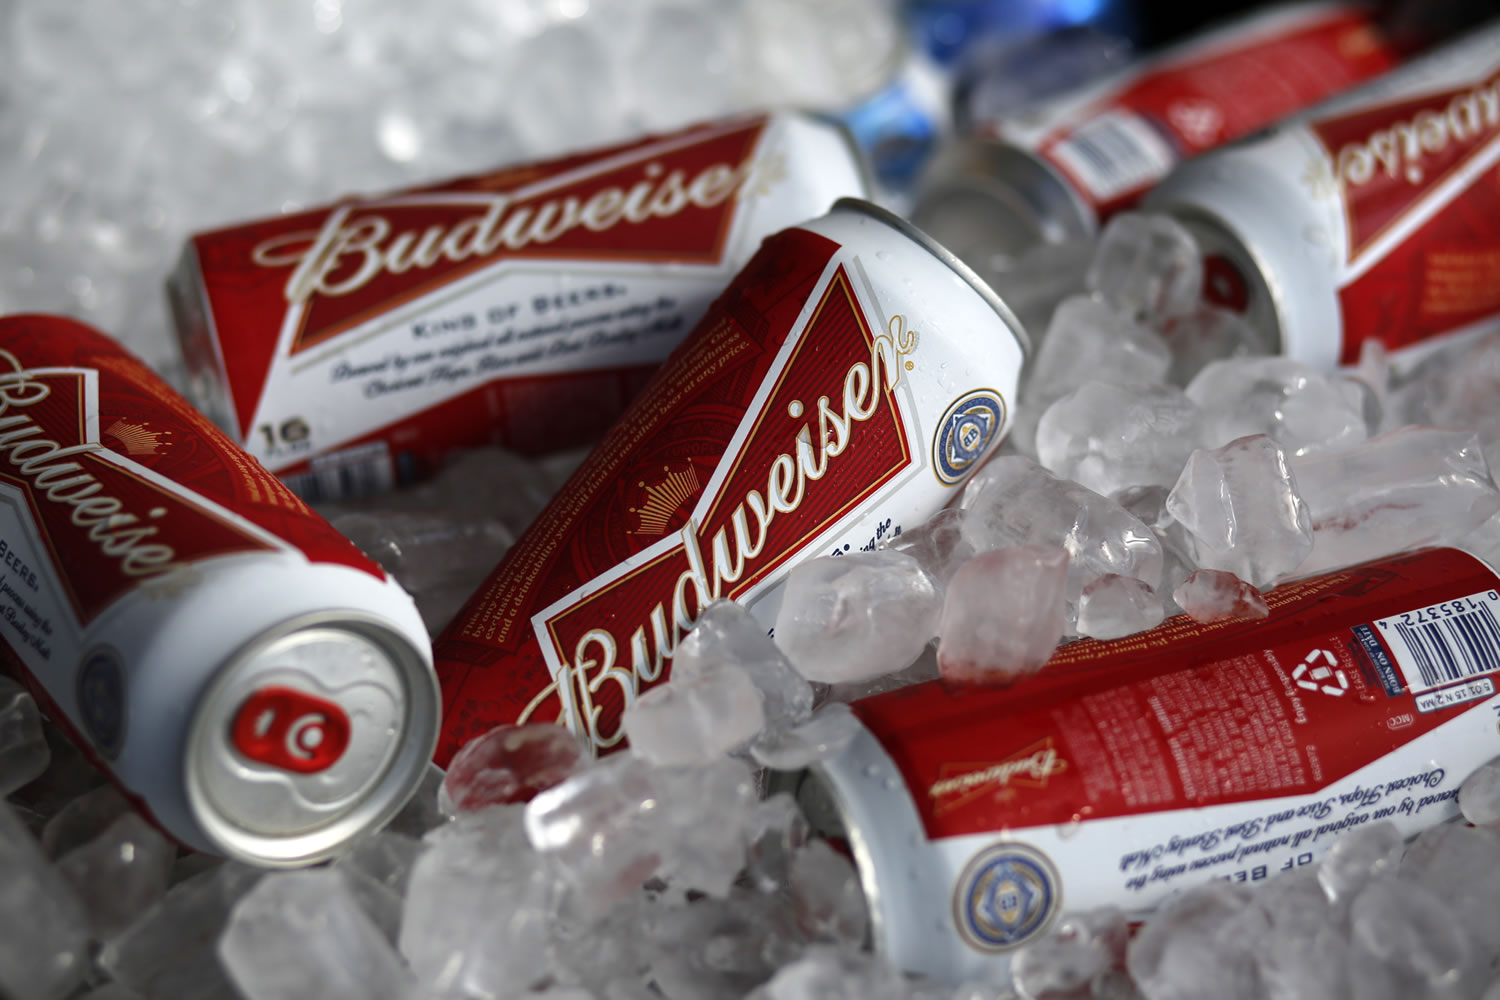 Budweiser brewer Anheuser-Busch InBev raised its takeover bid Monday for SABMiller to 70.4 billion pounds ($108.2 billion).